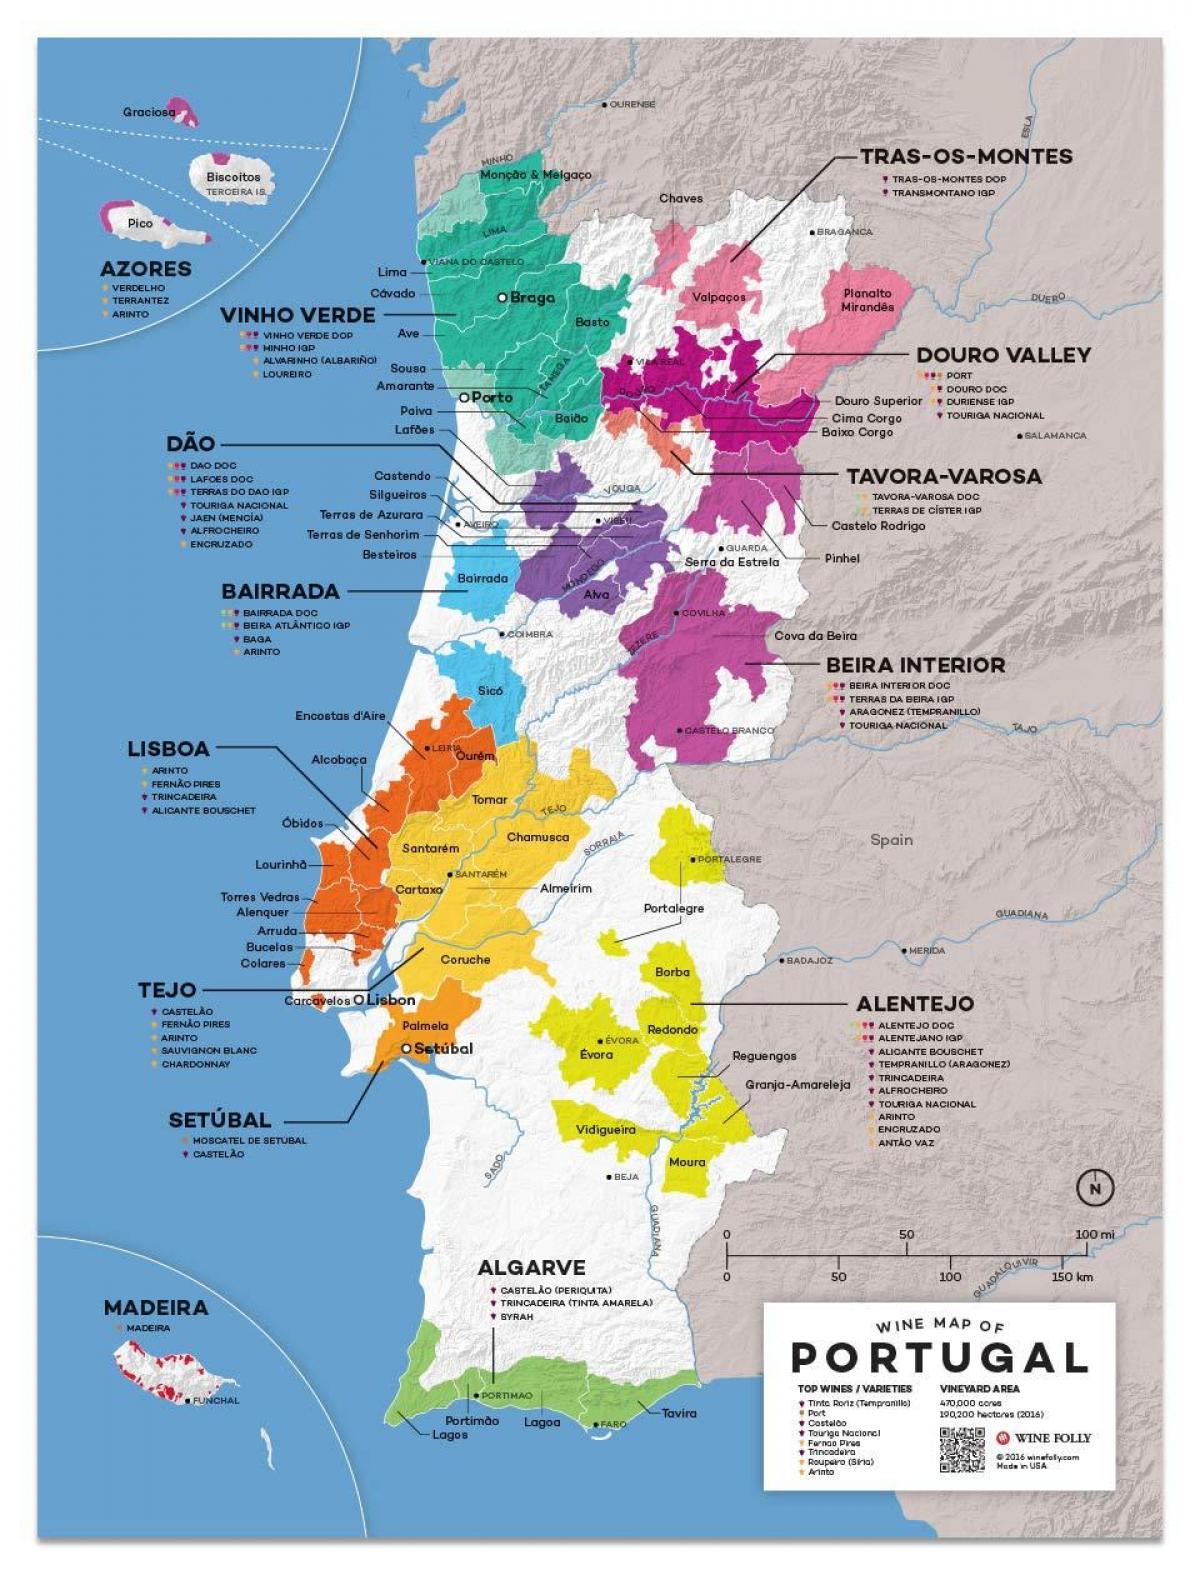 karta win w Portugalii